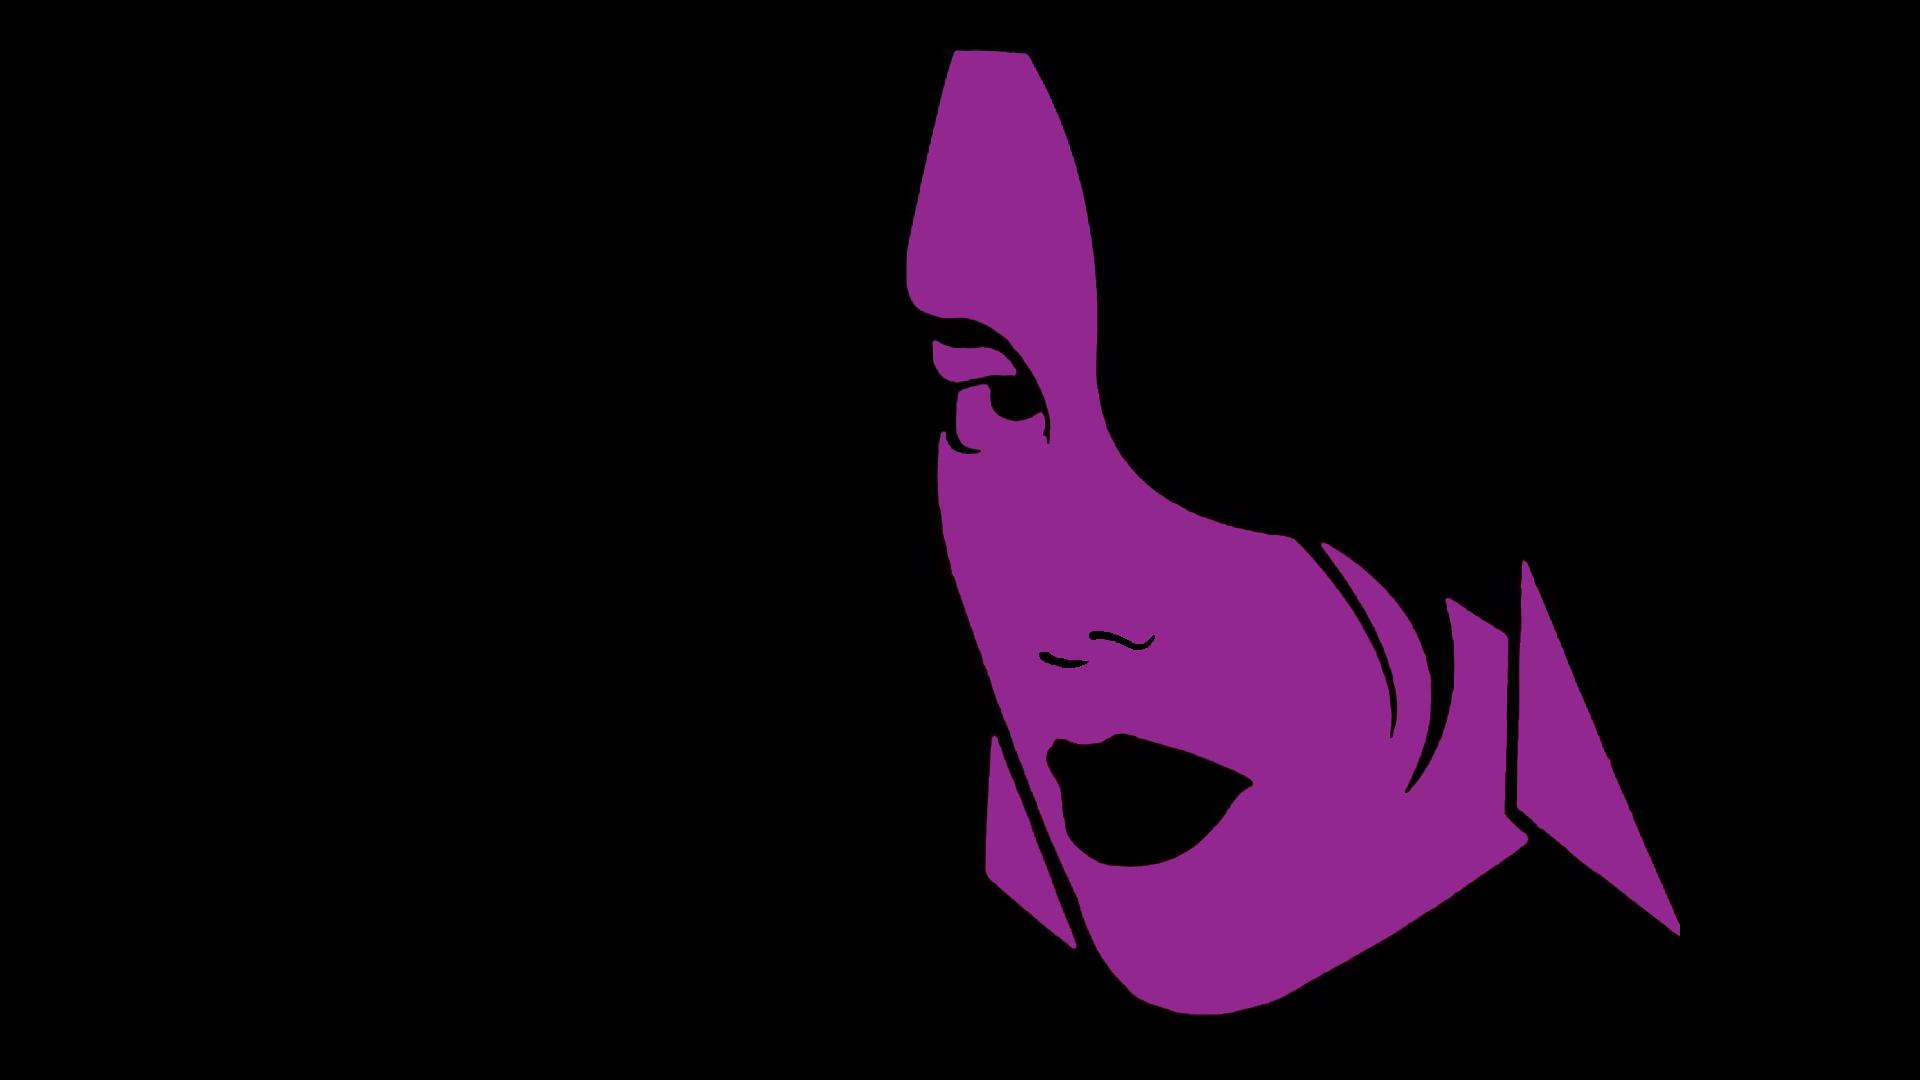 Grand Theft Auto Vice City Minimalism Simple Background Face Illustration Women Rockstar Games Black 1920x1080